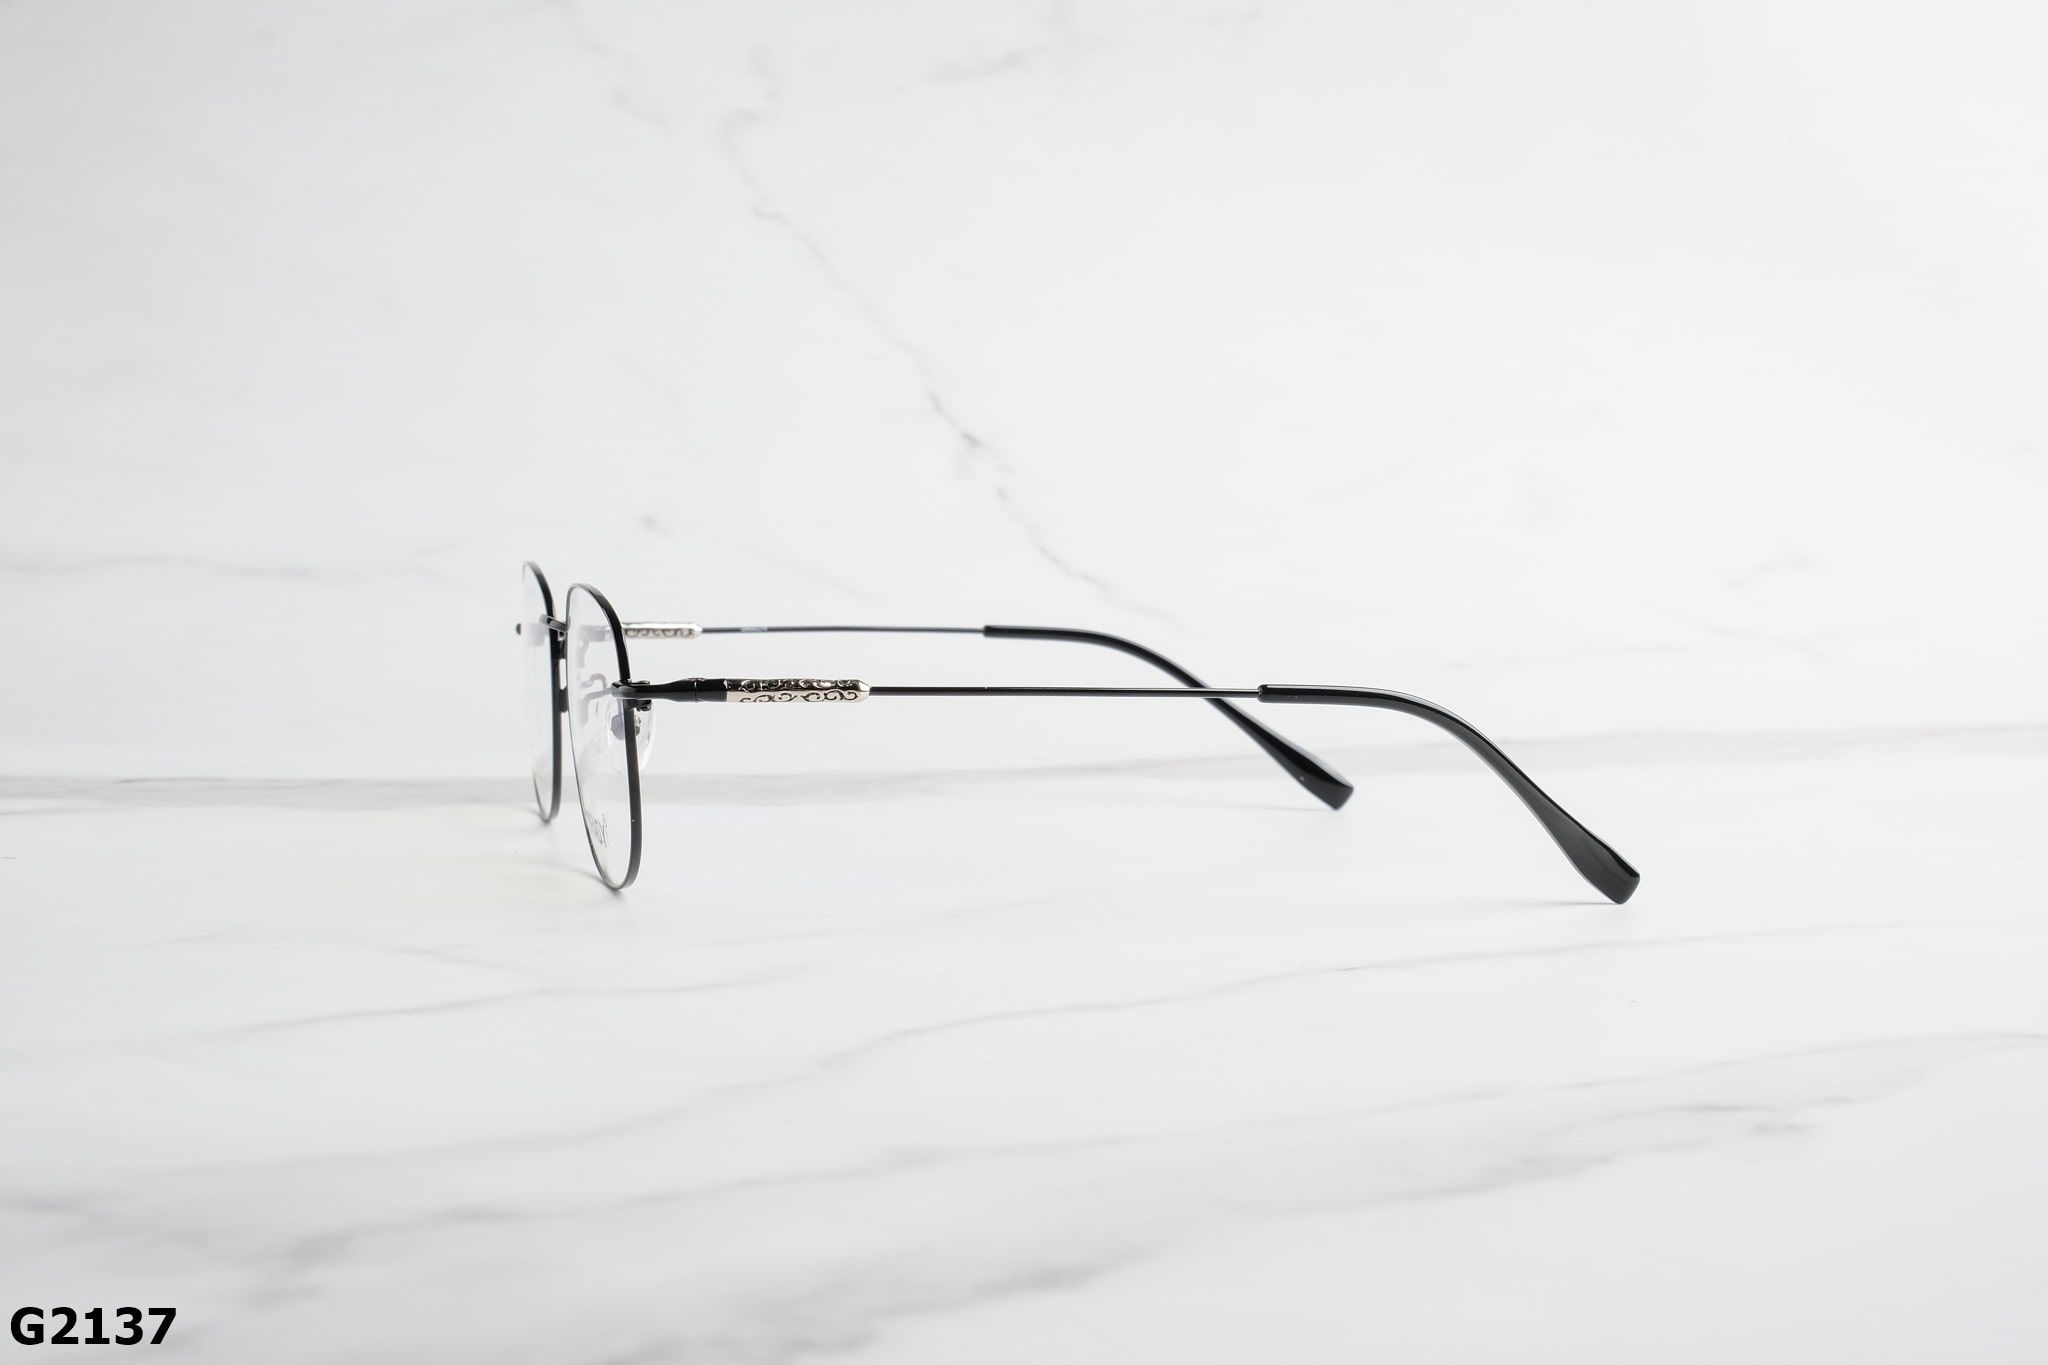  SHADY Eyewear - Glasses - G2137 